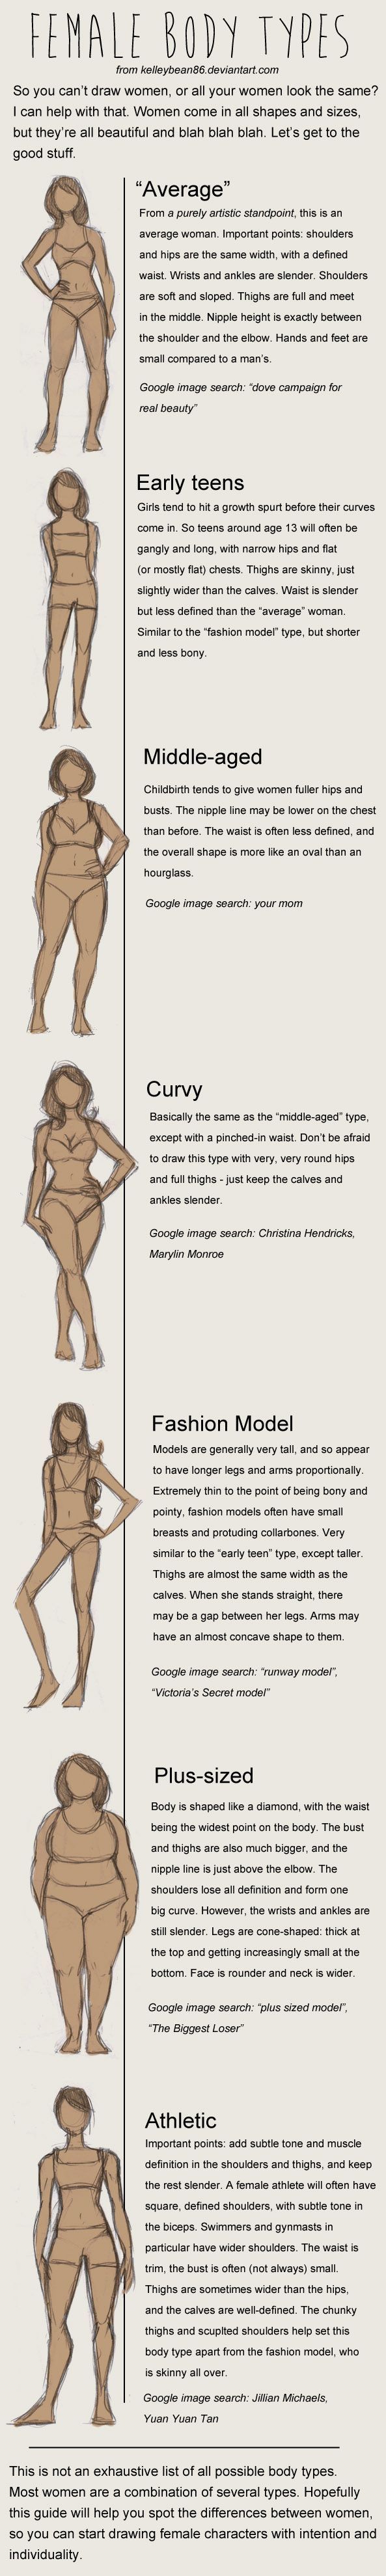 Draw Female Body Types by ~kelleybean86 on deviantART